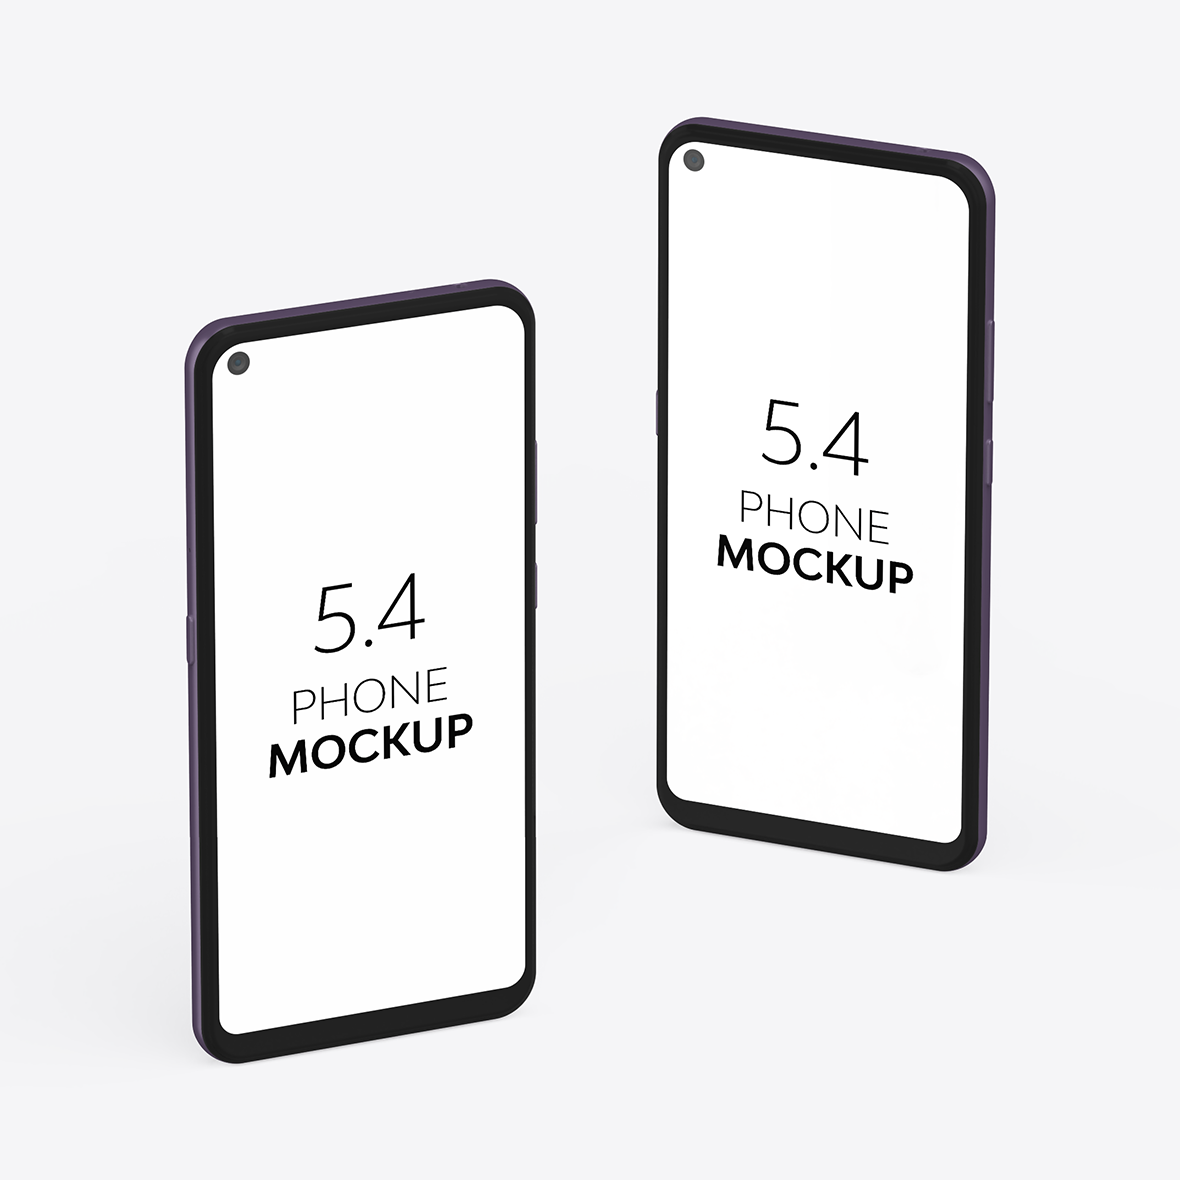 5.4 Phone Mockup